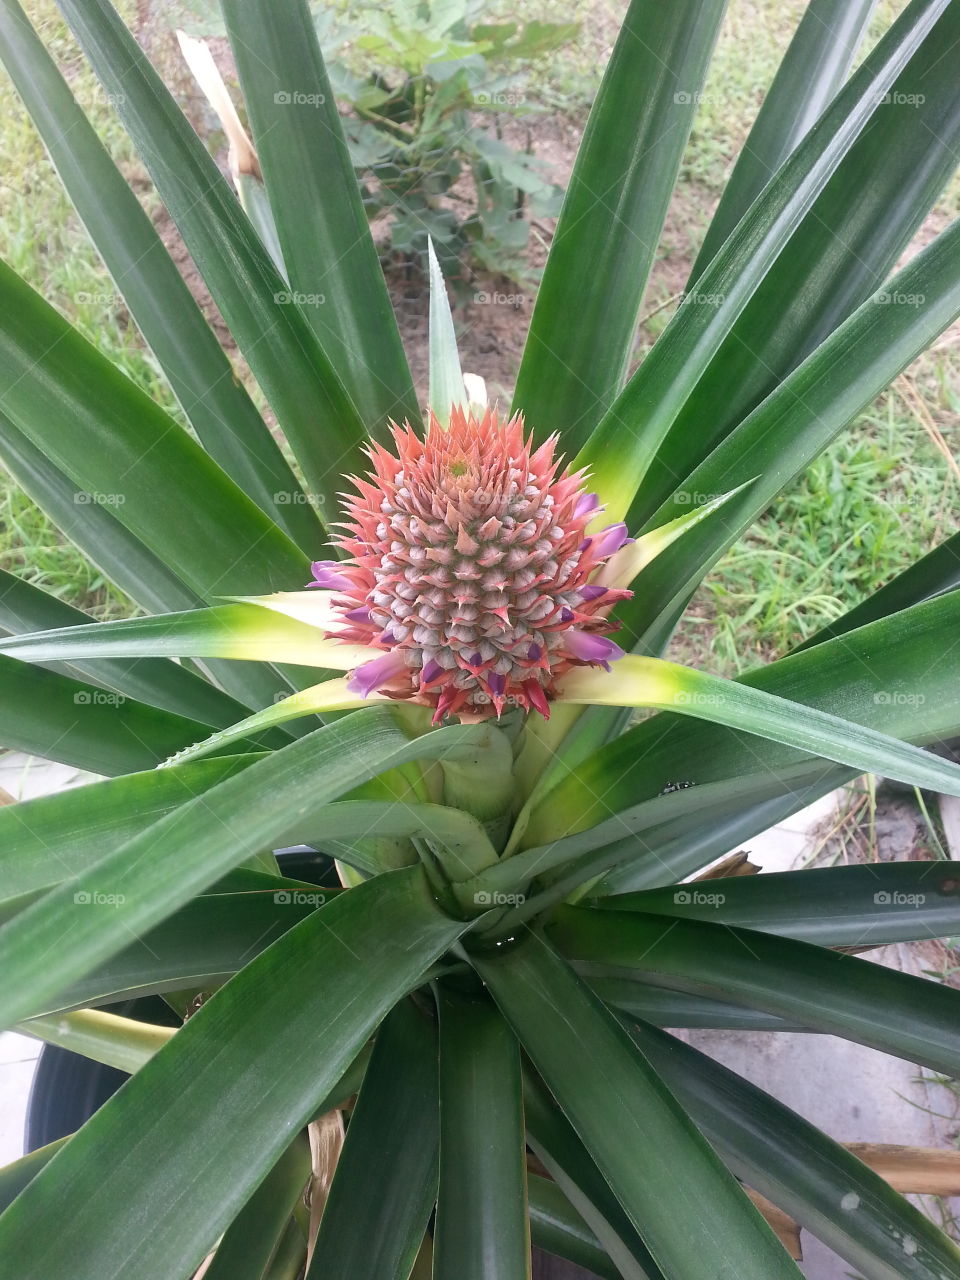 pineapple2. dads garden